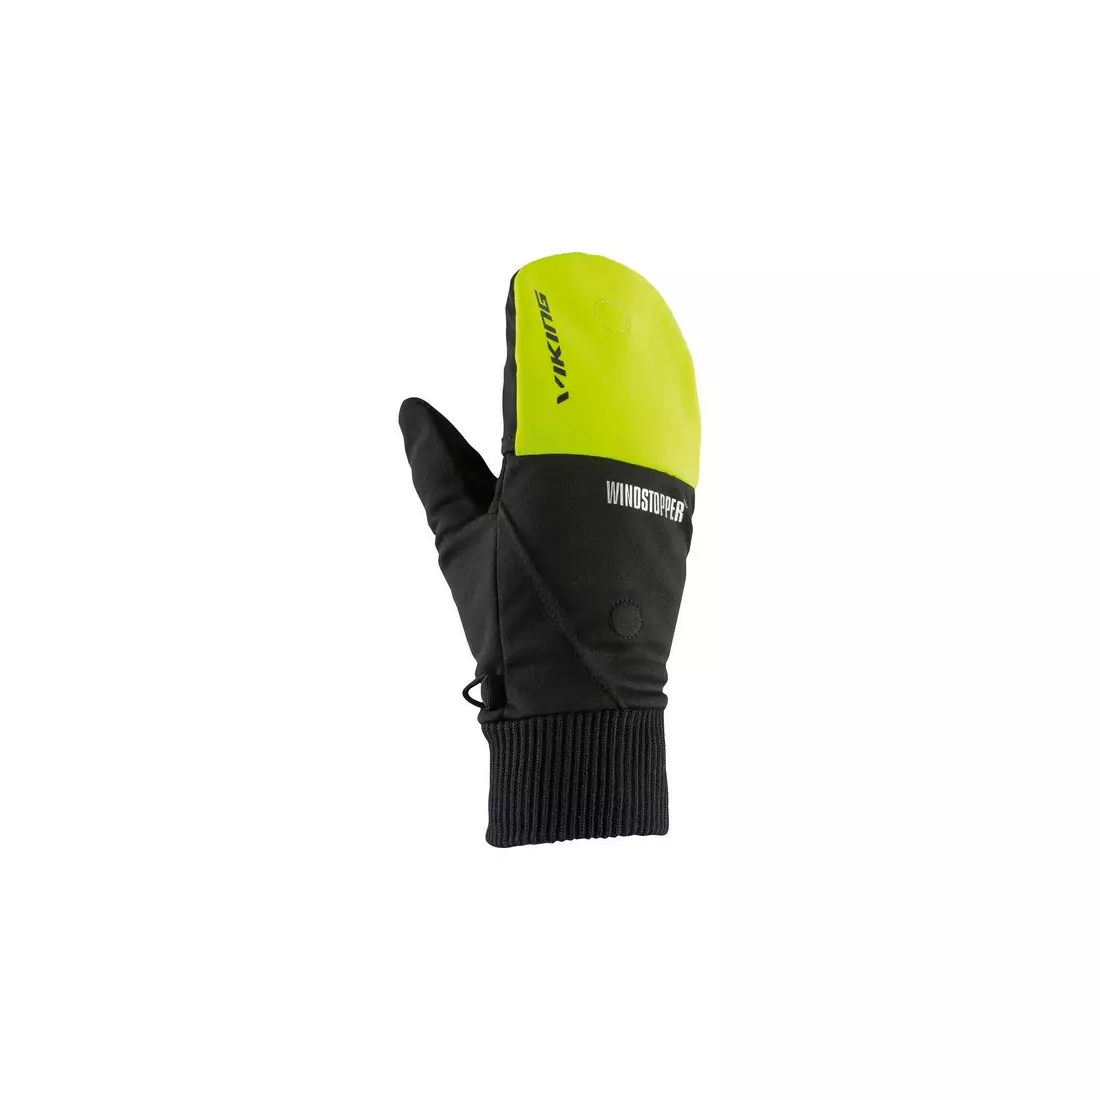 VIKING zimowe rękawiczki HADAR GORE-TEX INFINIUM fluo black 170/20/0660/64